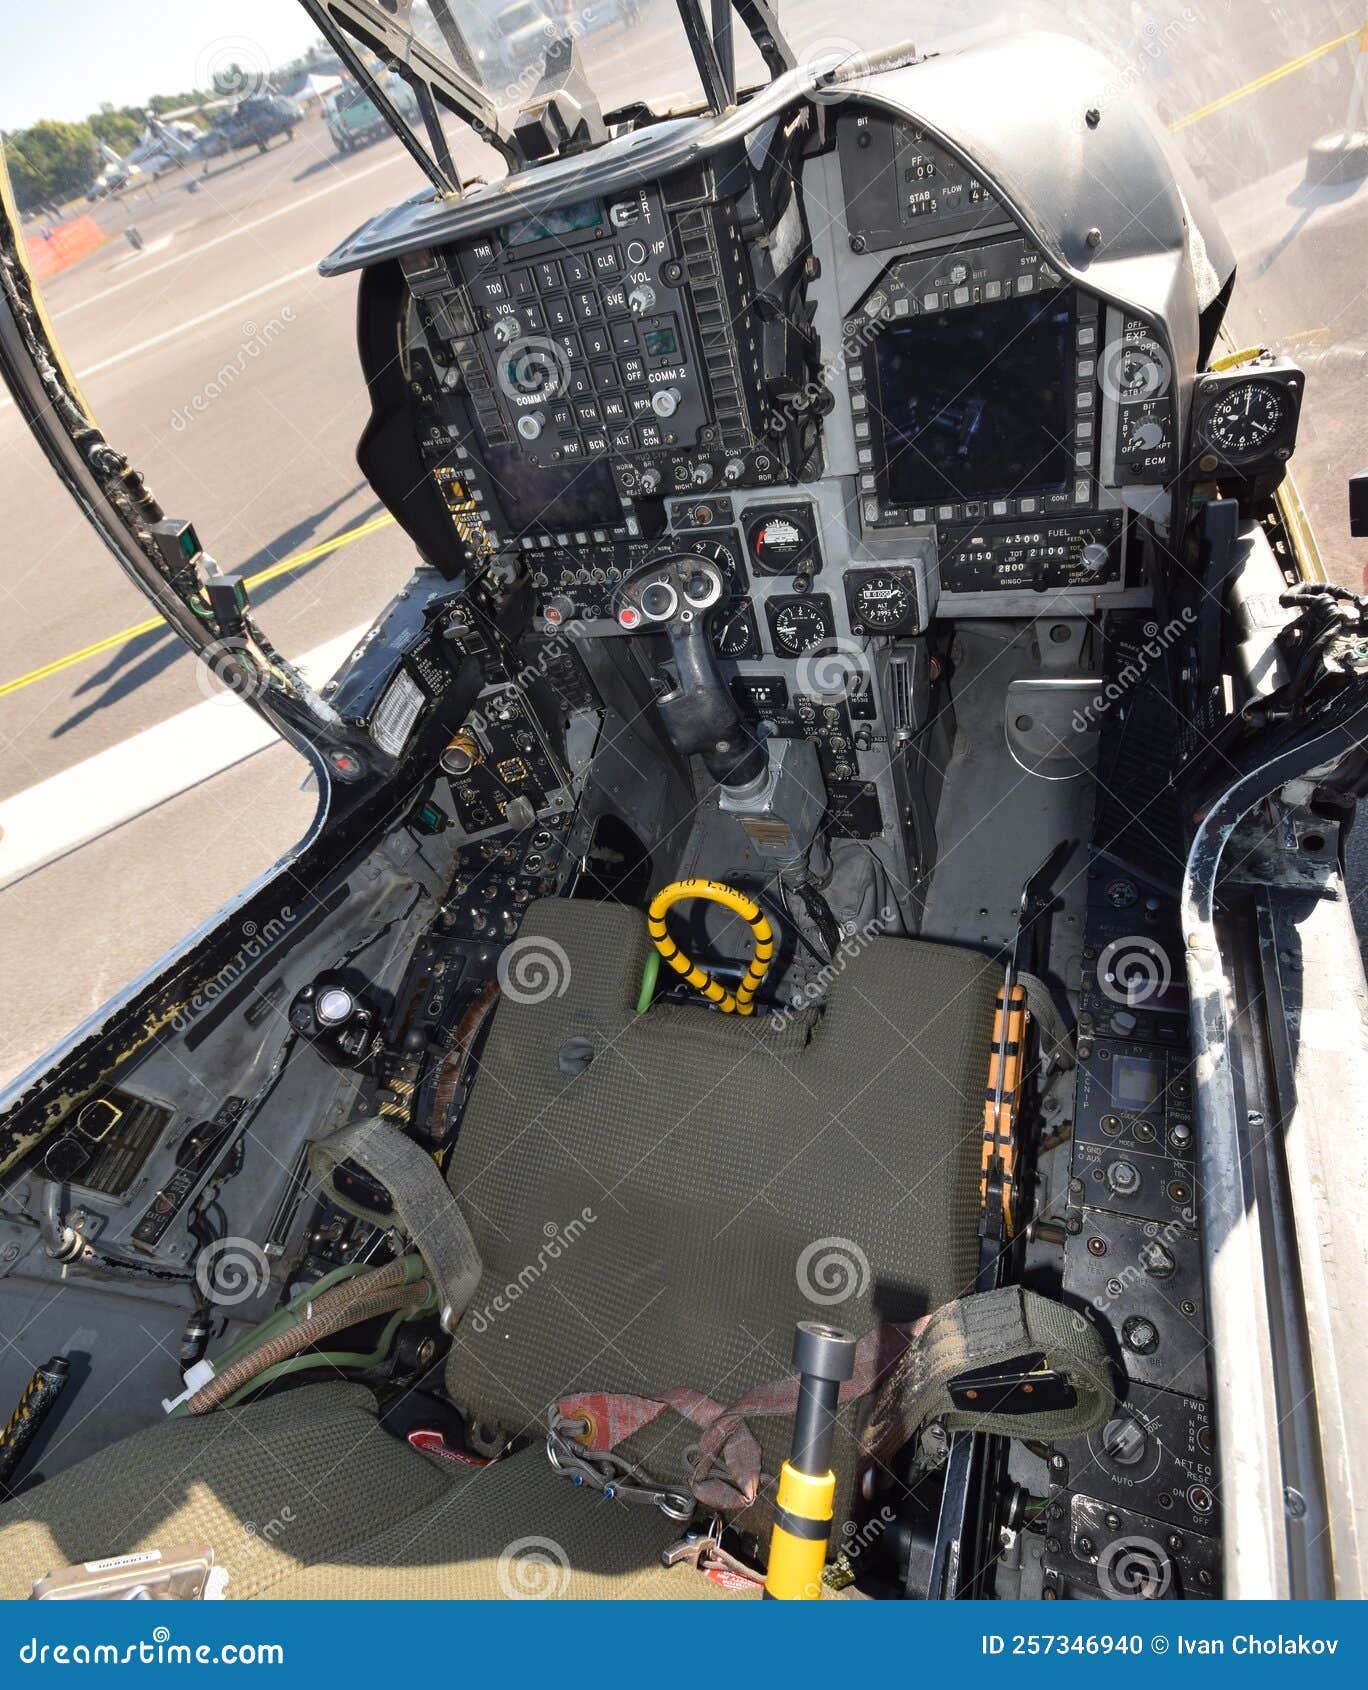 jetfighter cockpit interior view